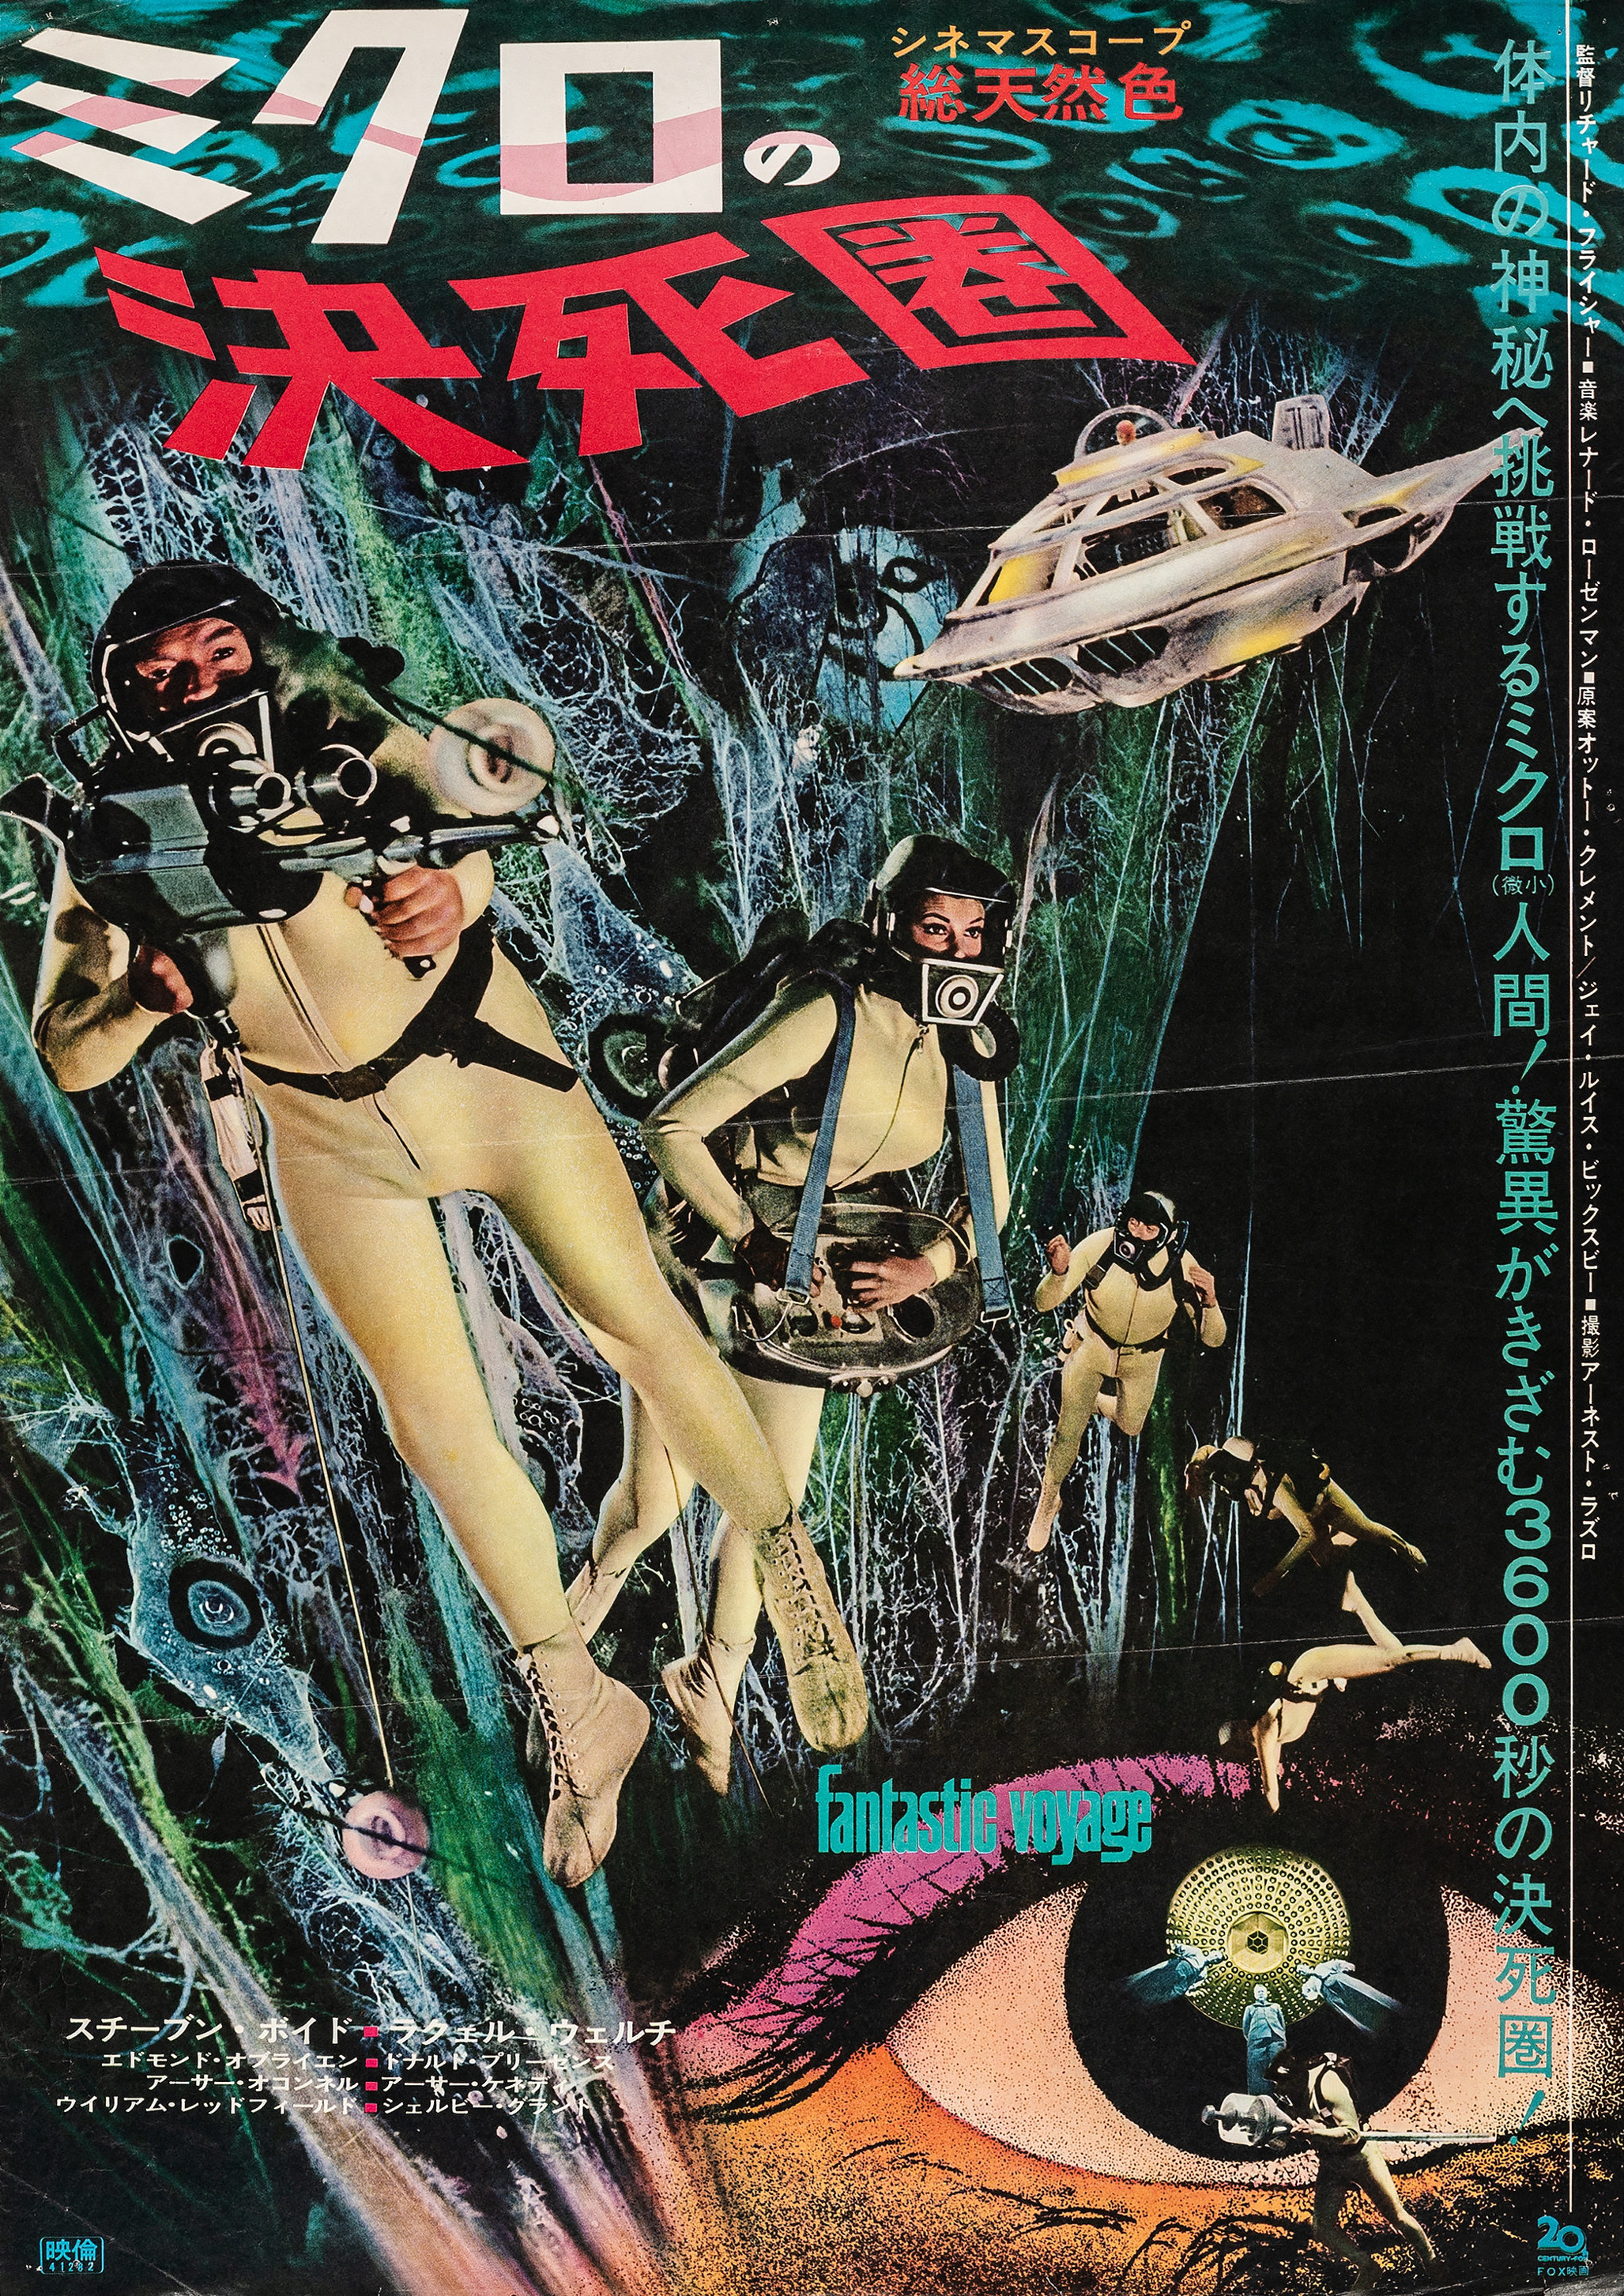 Mega Sized Movie Poster Image for Fantastic Voyage (#8 of 8)